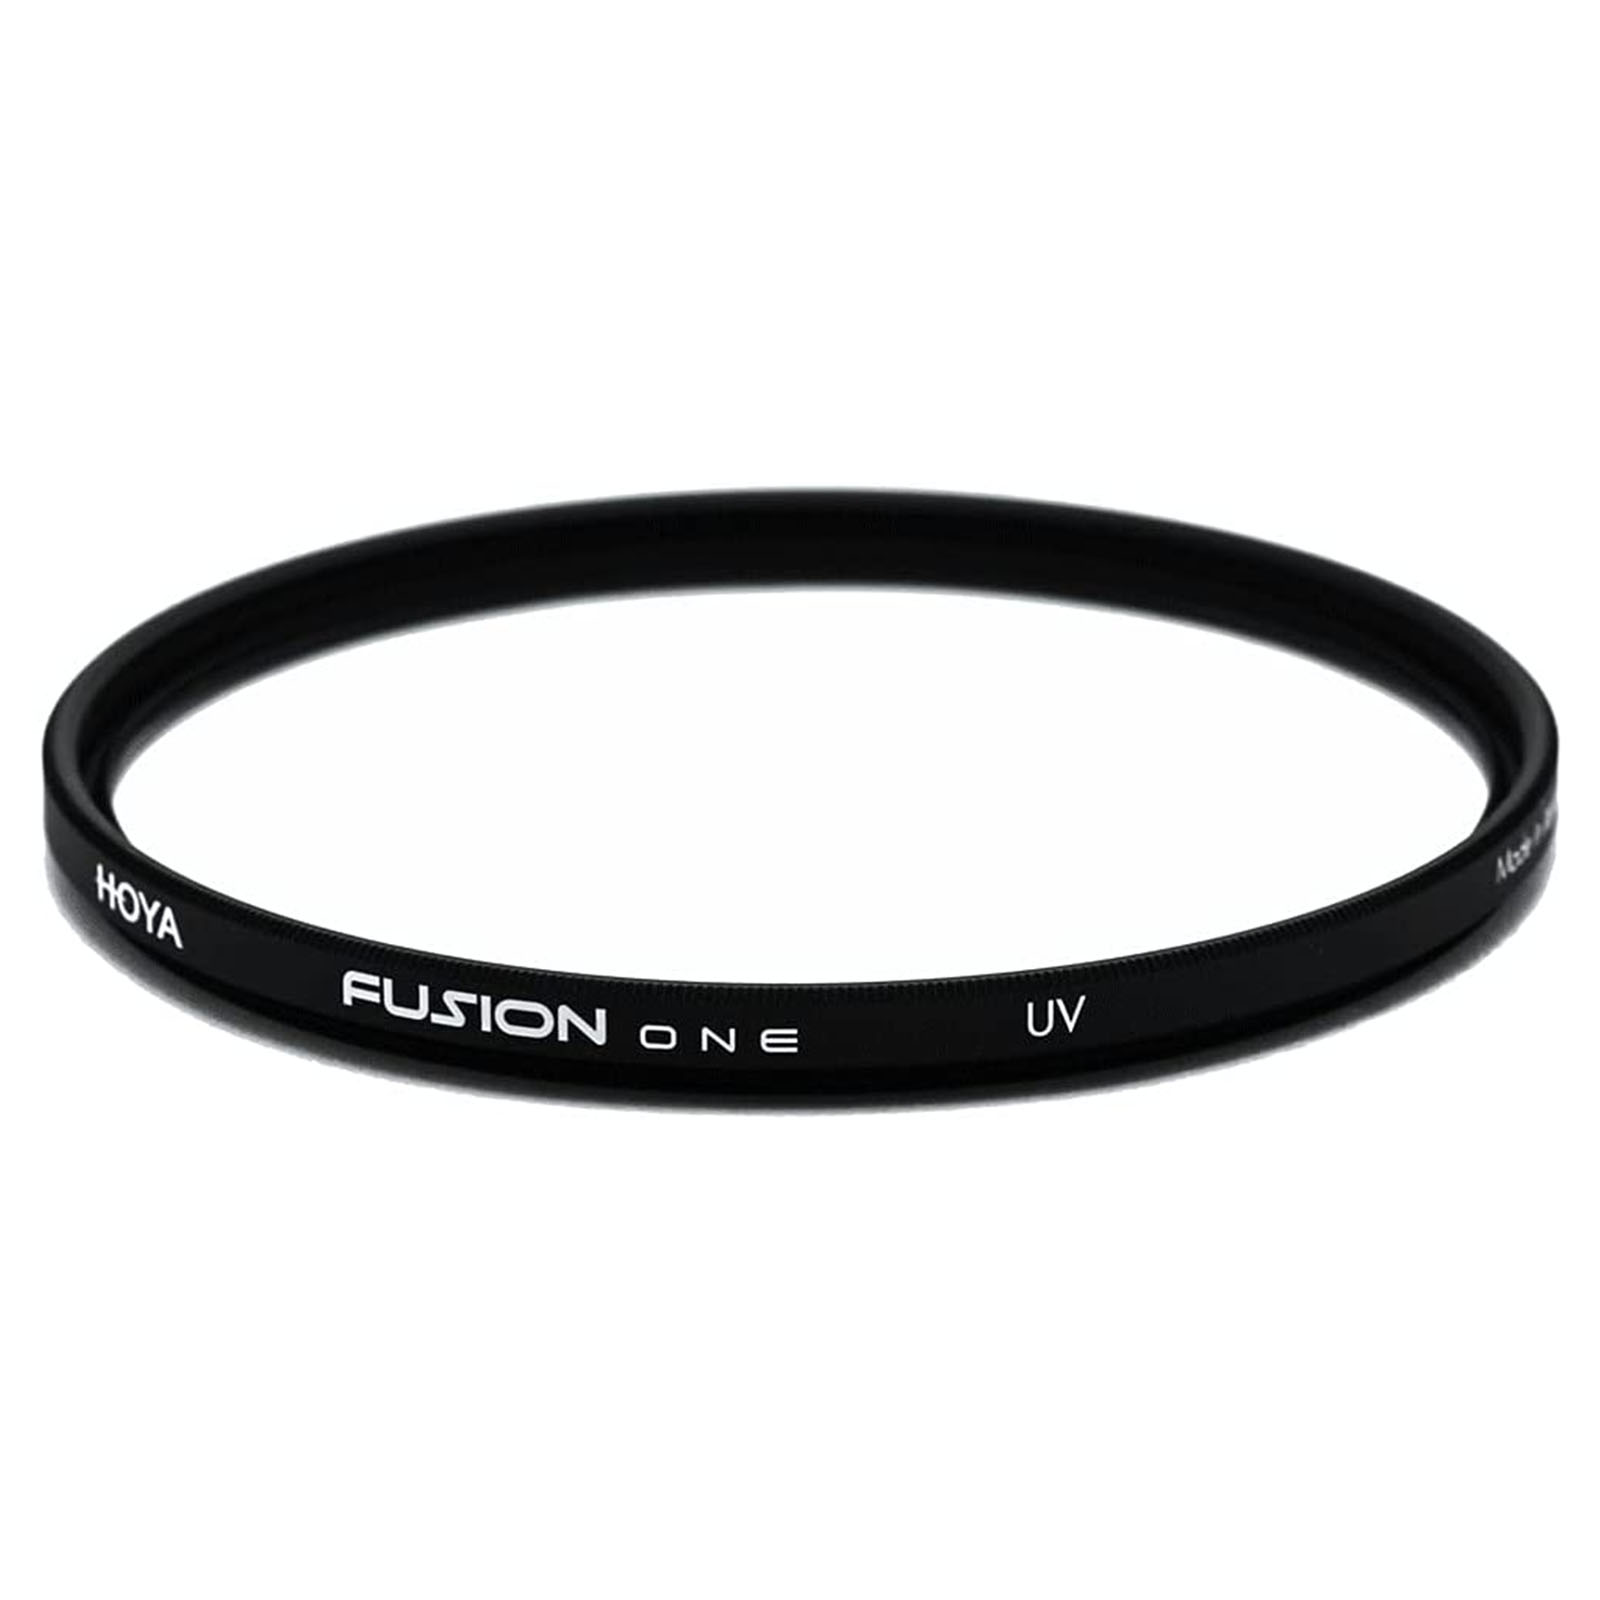 Image of Hoya 77mm Fusion One Next UV Filter